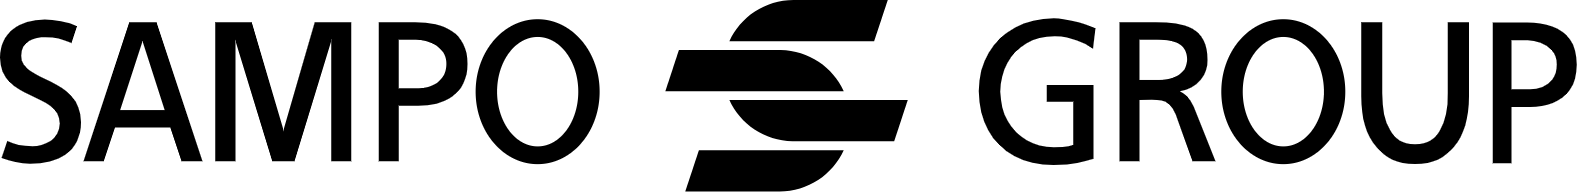 Sampo logo large (transparent PNG)